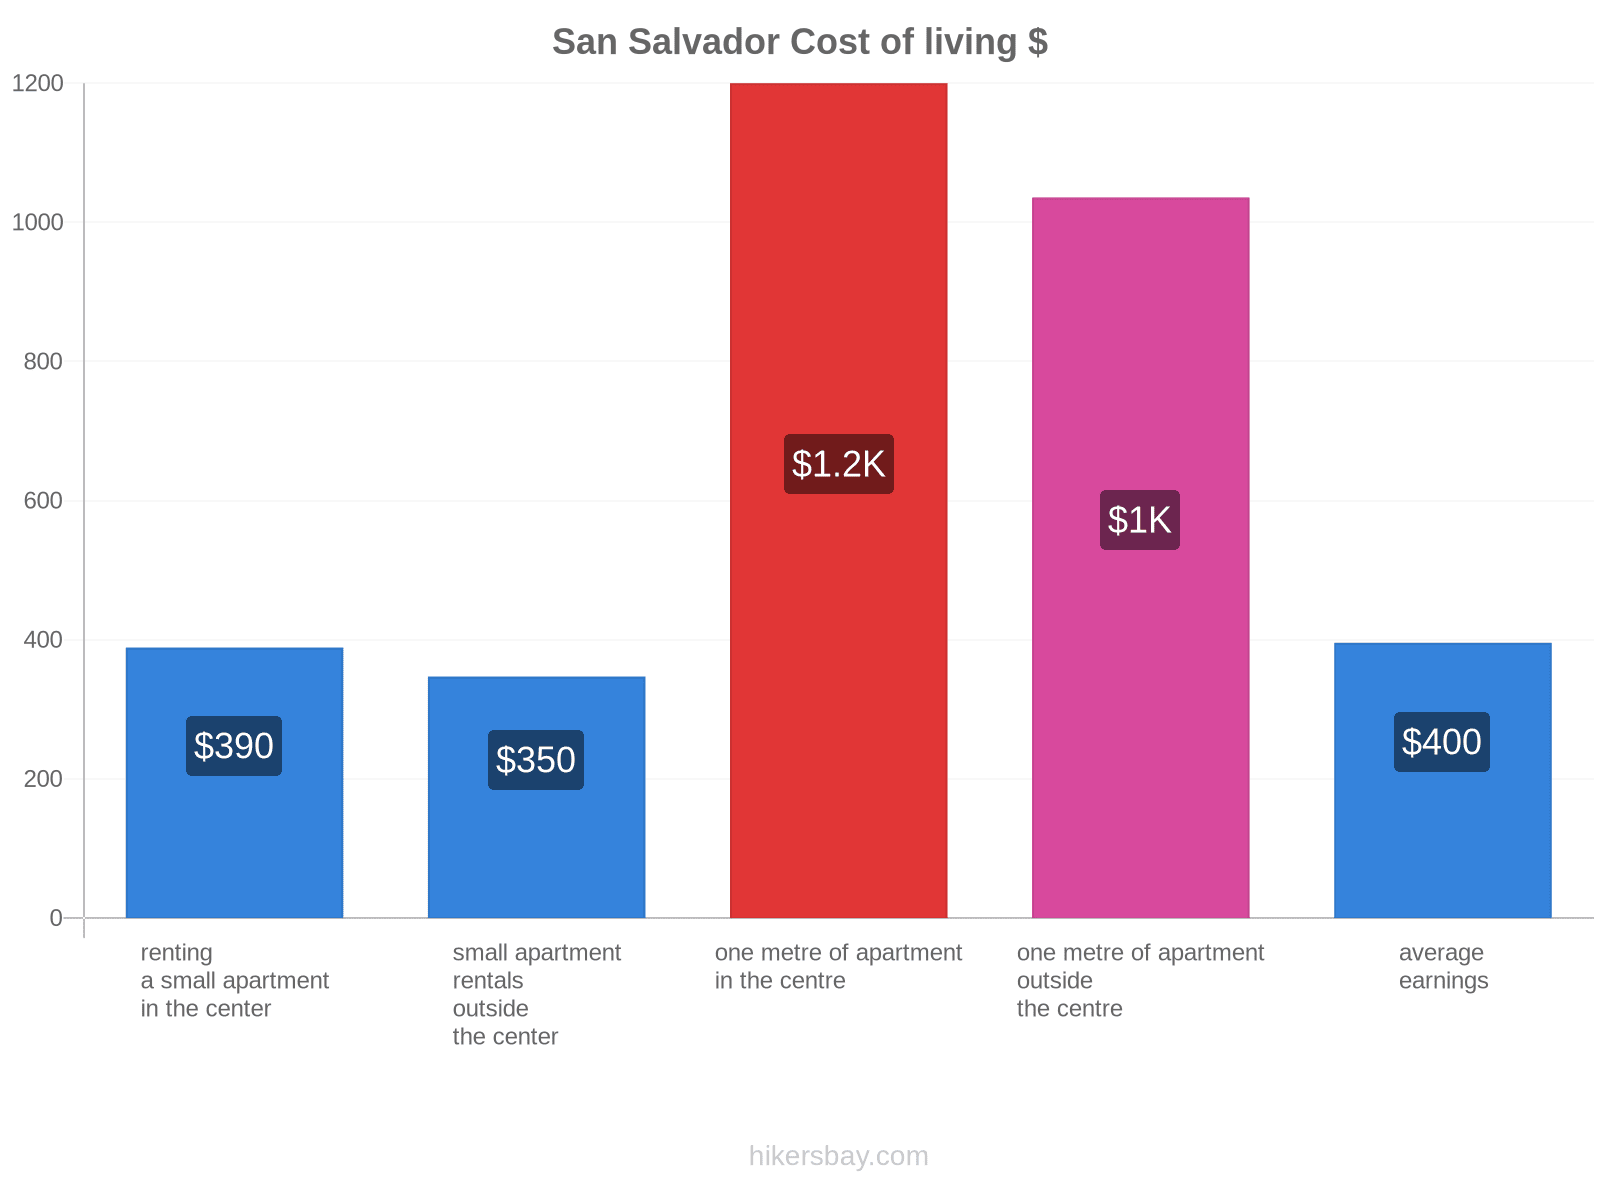 San Salvador cost of living hikersbay.com